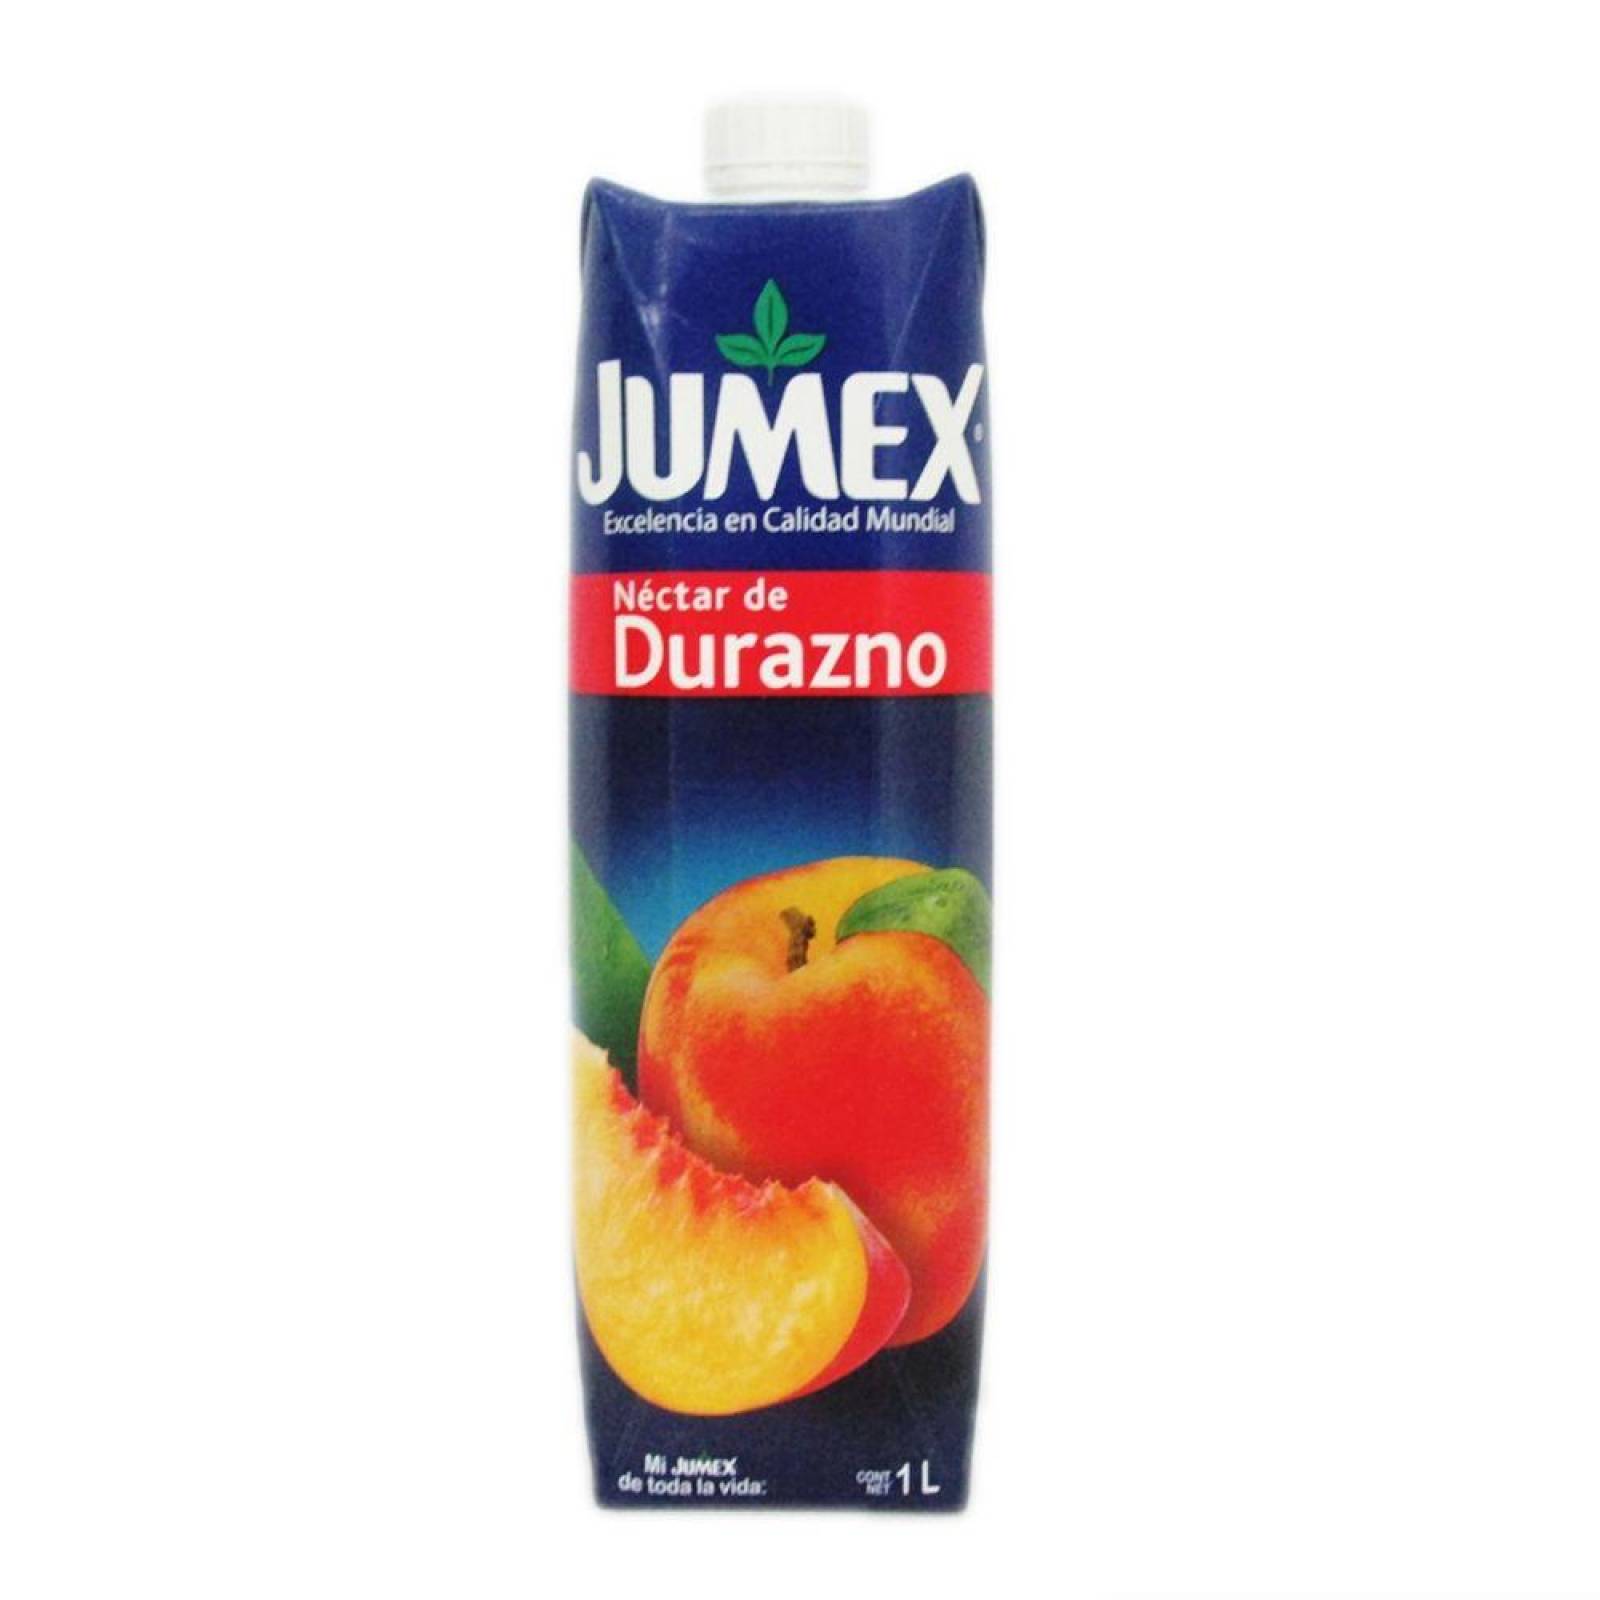 jumex apricot nectar no hfc